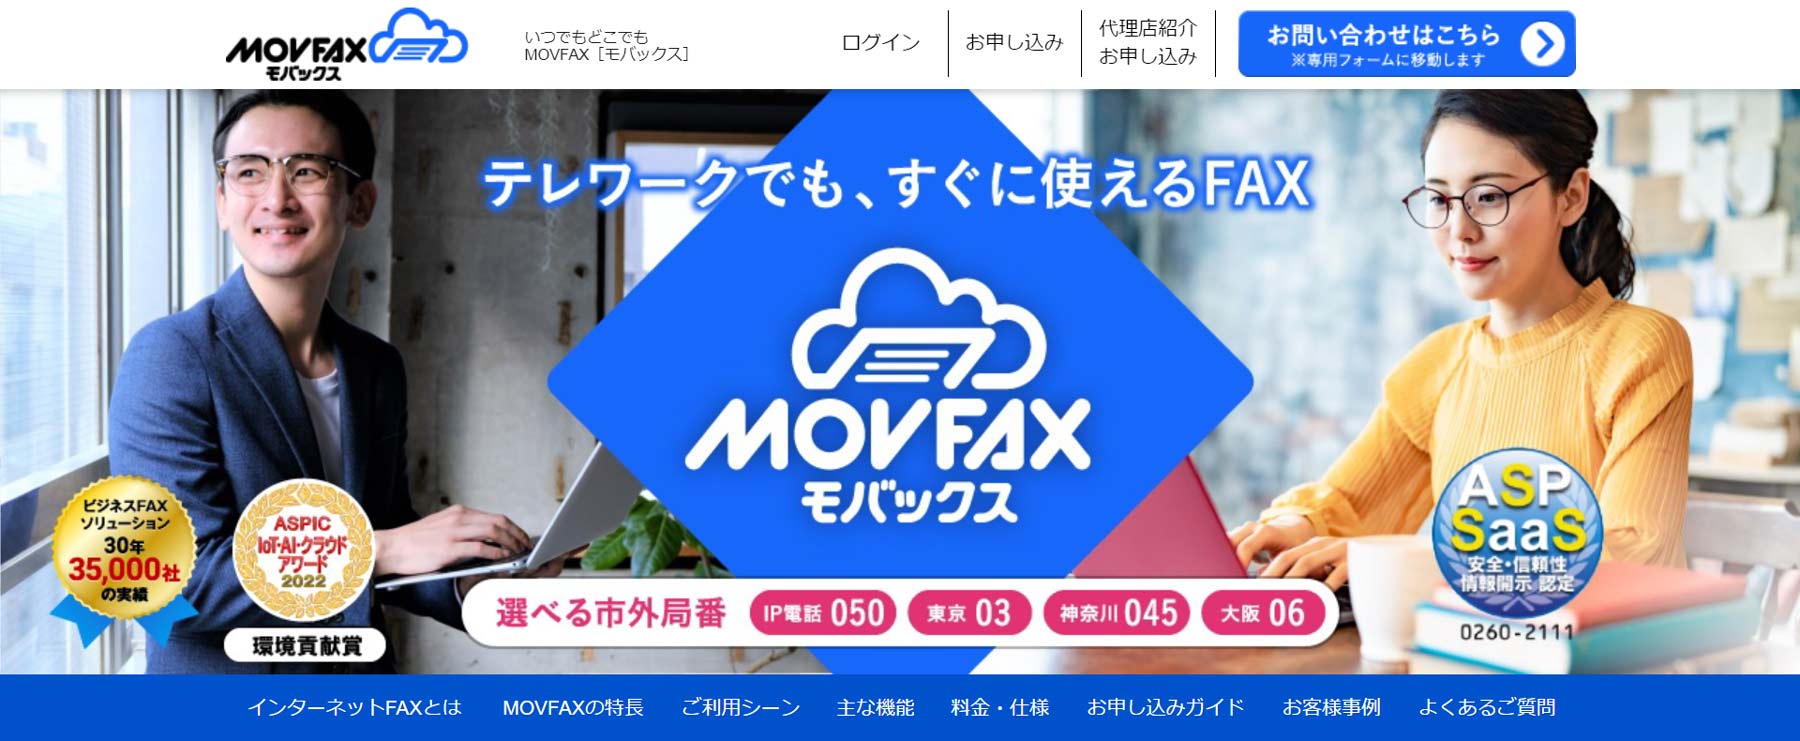 MOVFAX公式Webサイト